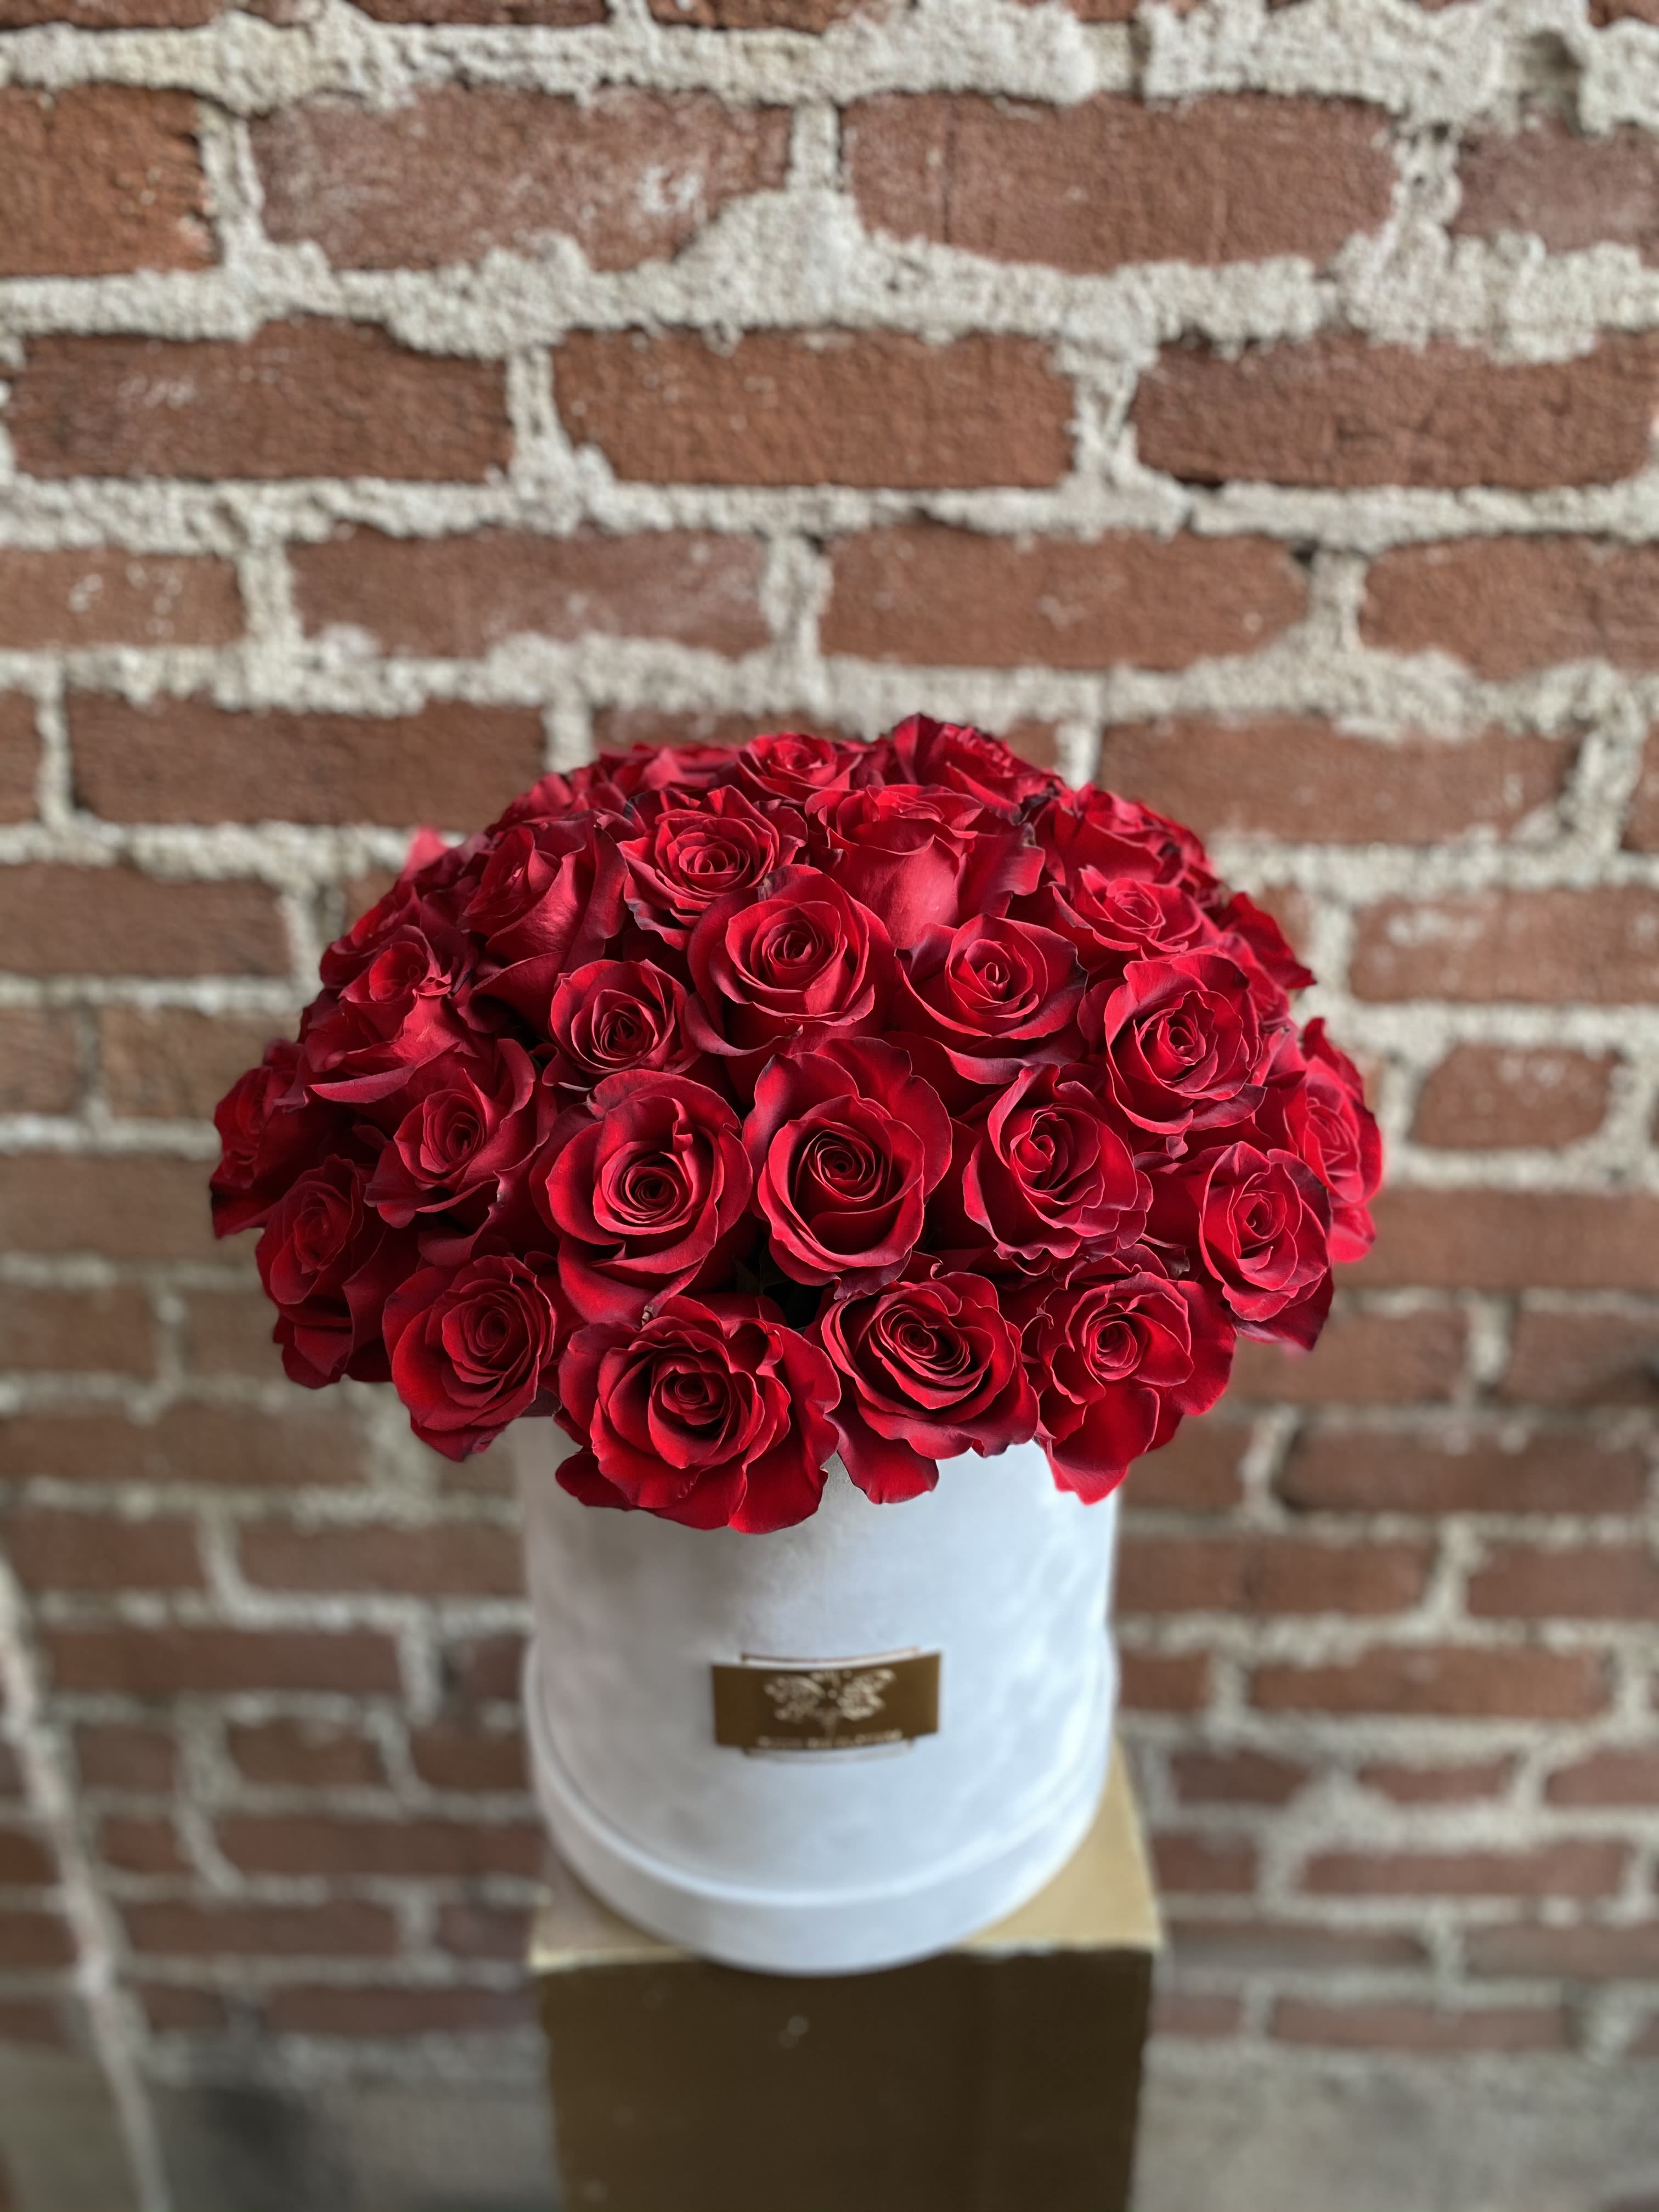 50 Red Roses - Studio City Florist in Studio City, CA | City Florist